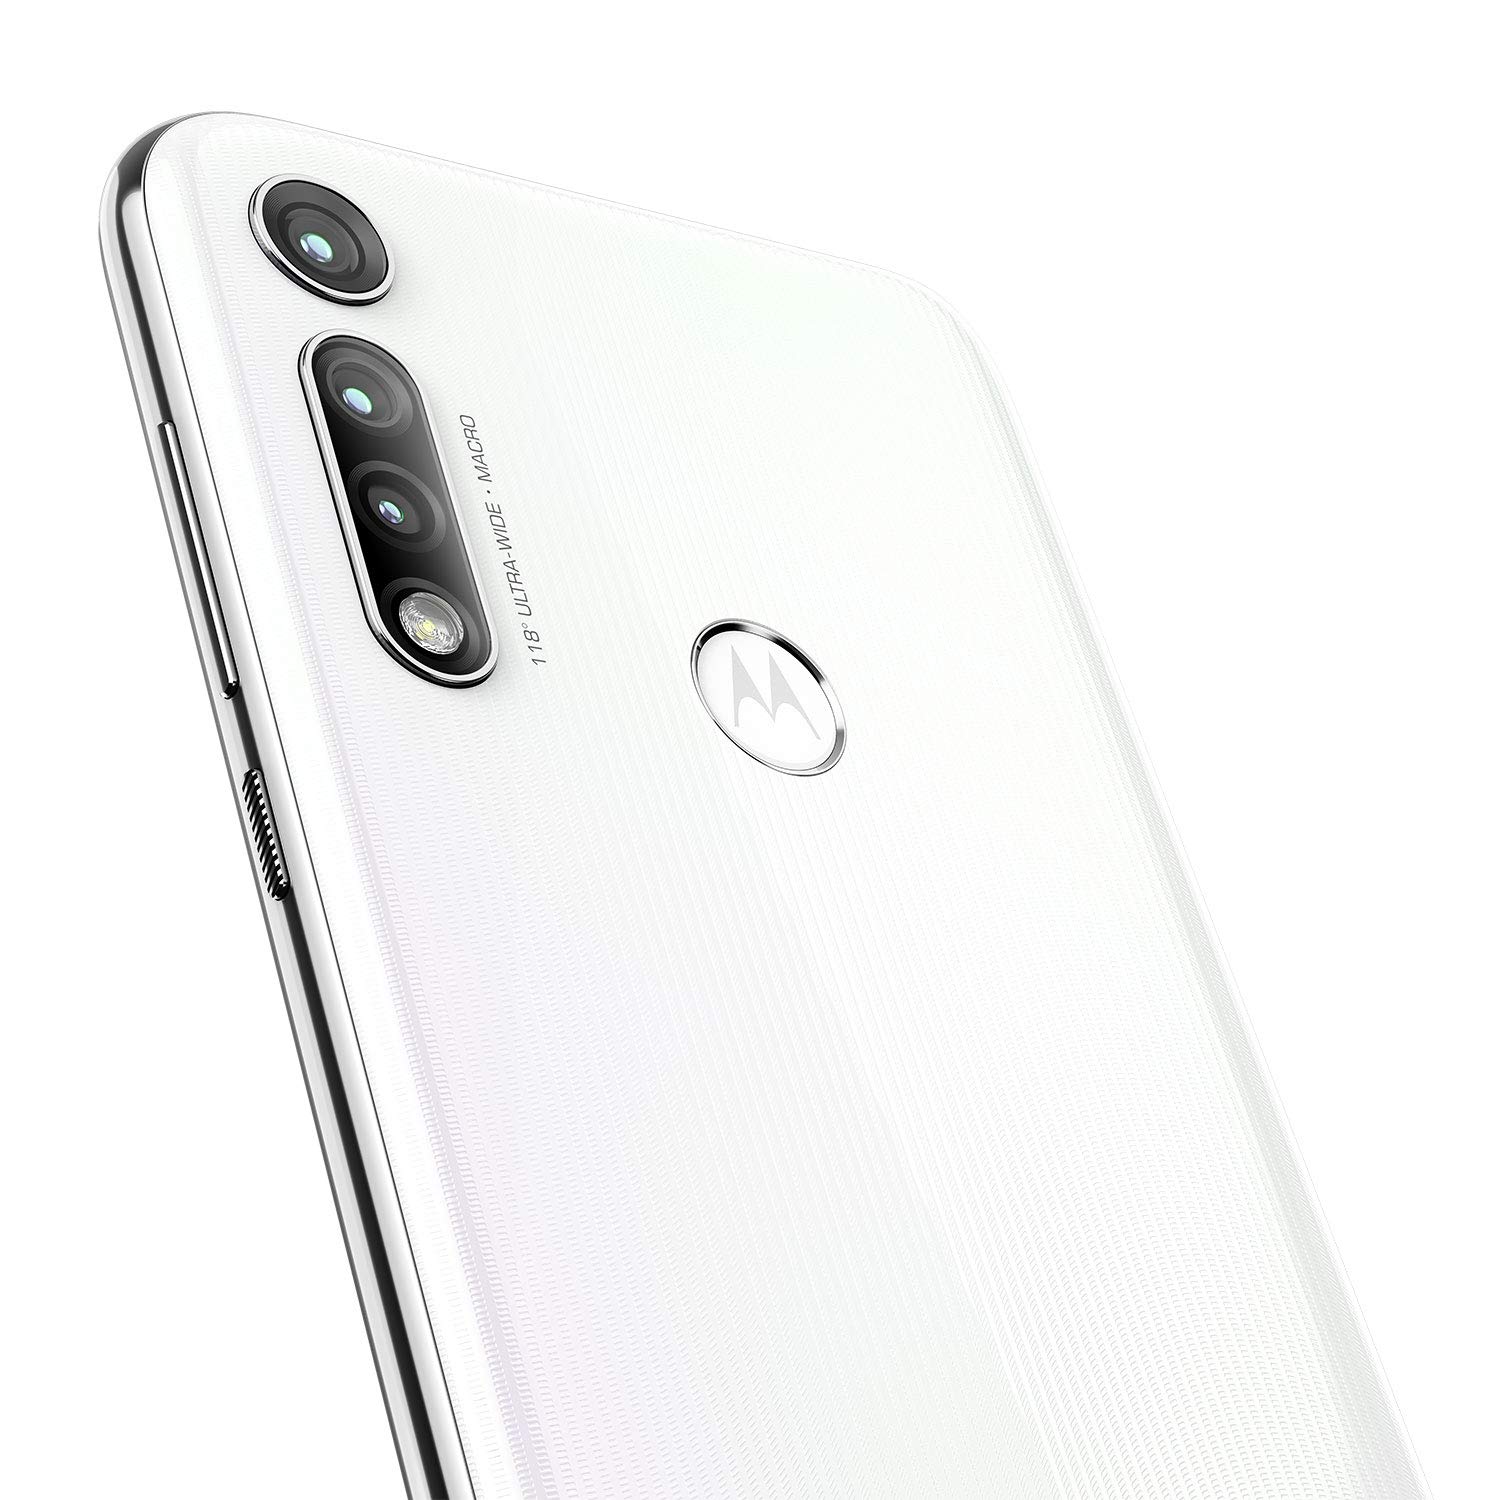 Moto G fast | 2020 | Unlocked | Made for US by Motorola | 3/32GB | 16MP Camera | White